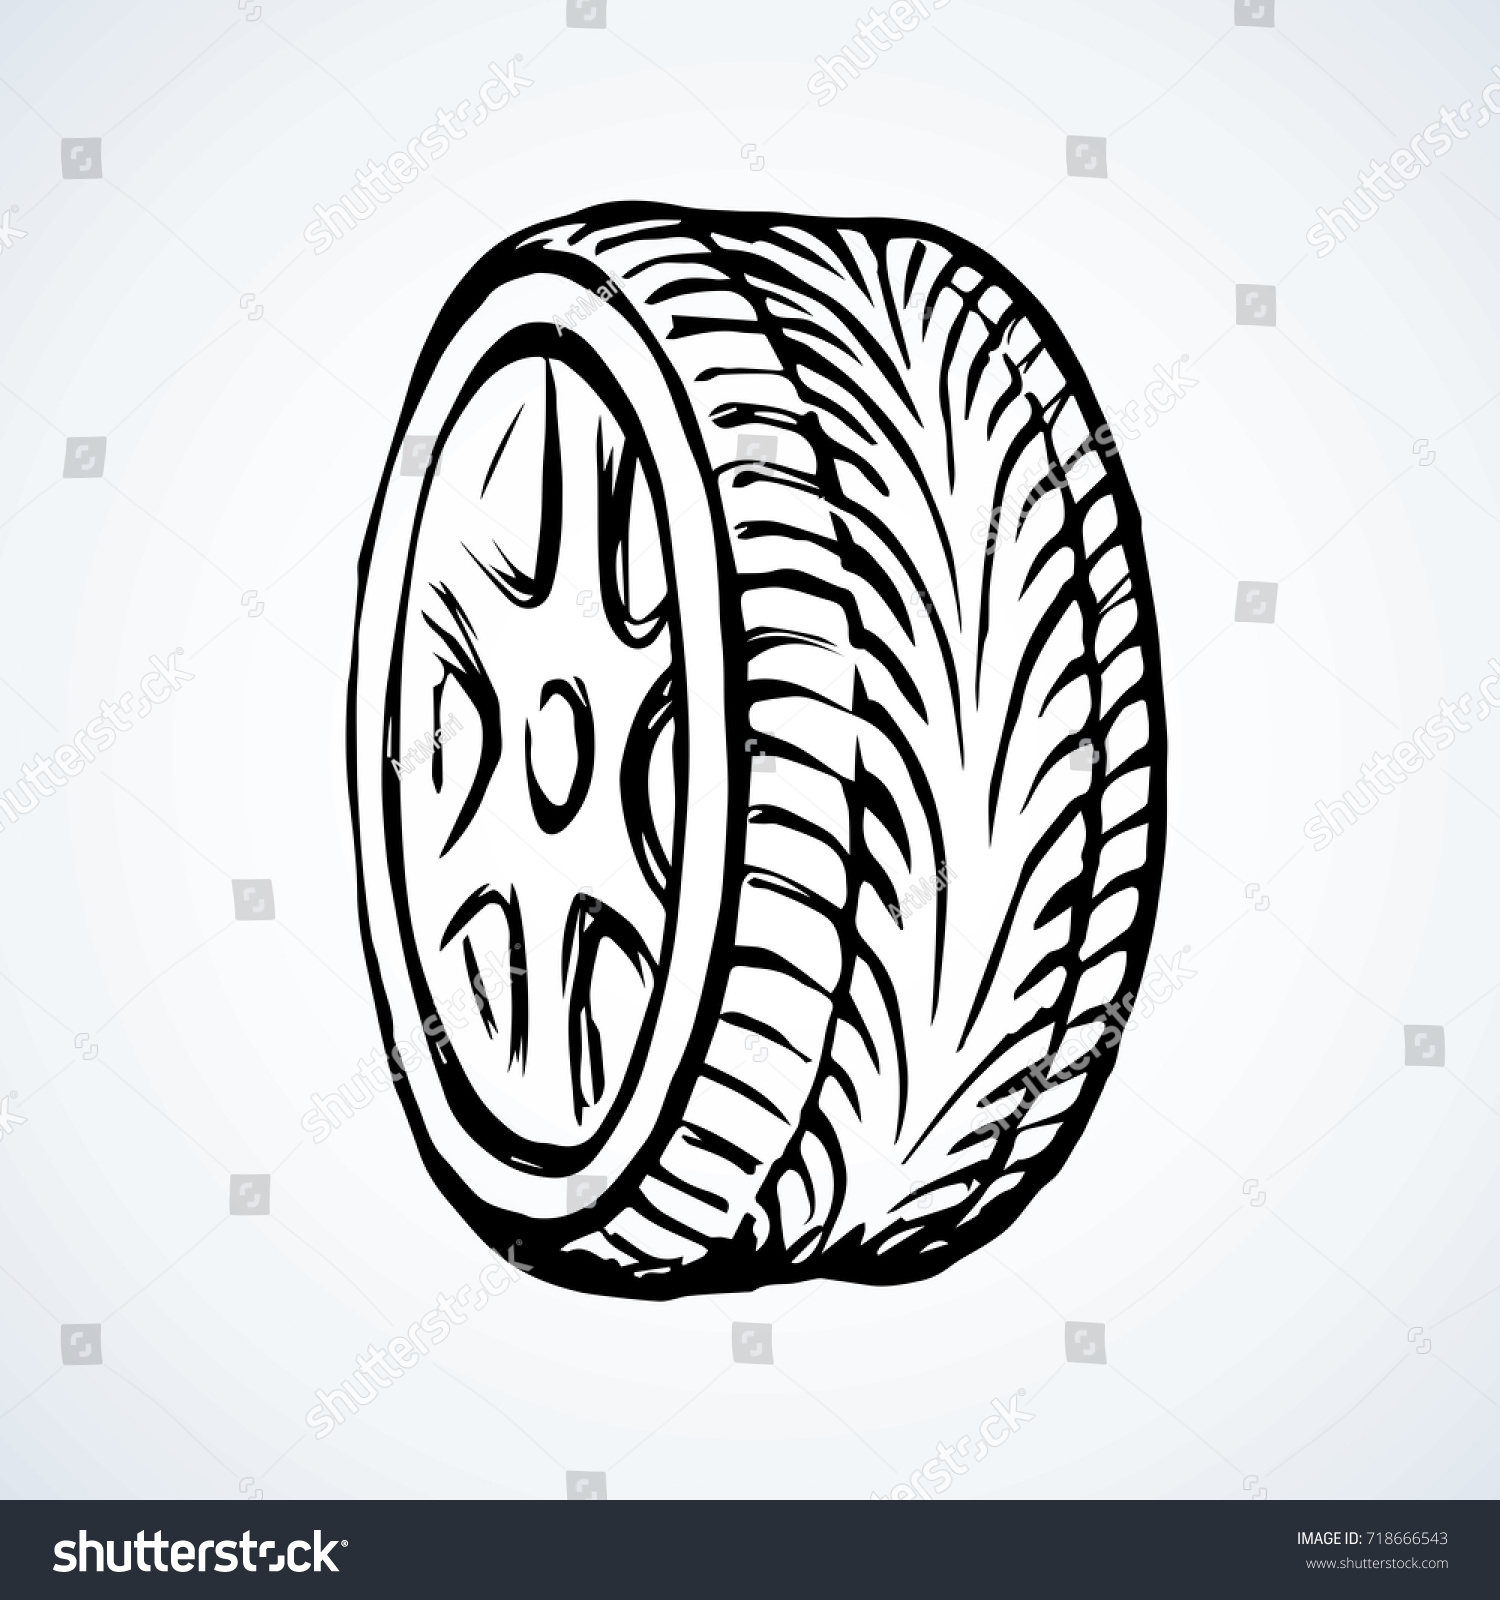 Tyre draw Images, Stock Photos & Vectors | Shutterstock